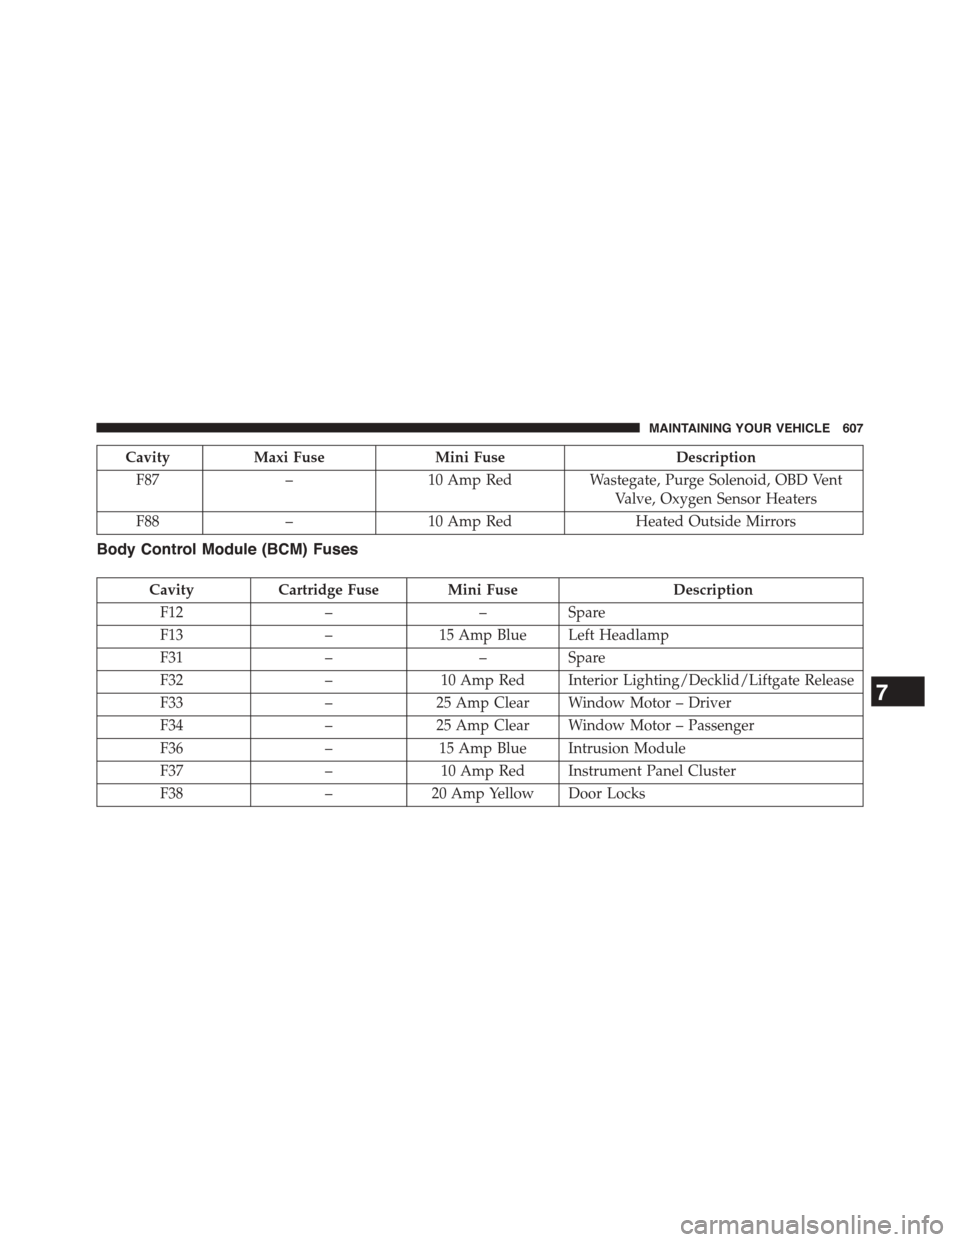 DODGE DART 2015 PF / 1.G Owners Manual CavityMaxi FuseMini FuseDescription
F87–10 Amp RedWastegate, Purge Solenoid, OBD Vent
Valve, Oxygen Sensor Heaters
F88–10 Amp RedHeated Outside Mirrors
Body Control Module (BCM) Fuses
CavityCartri